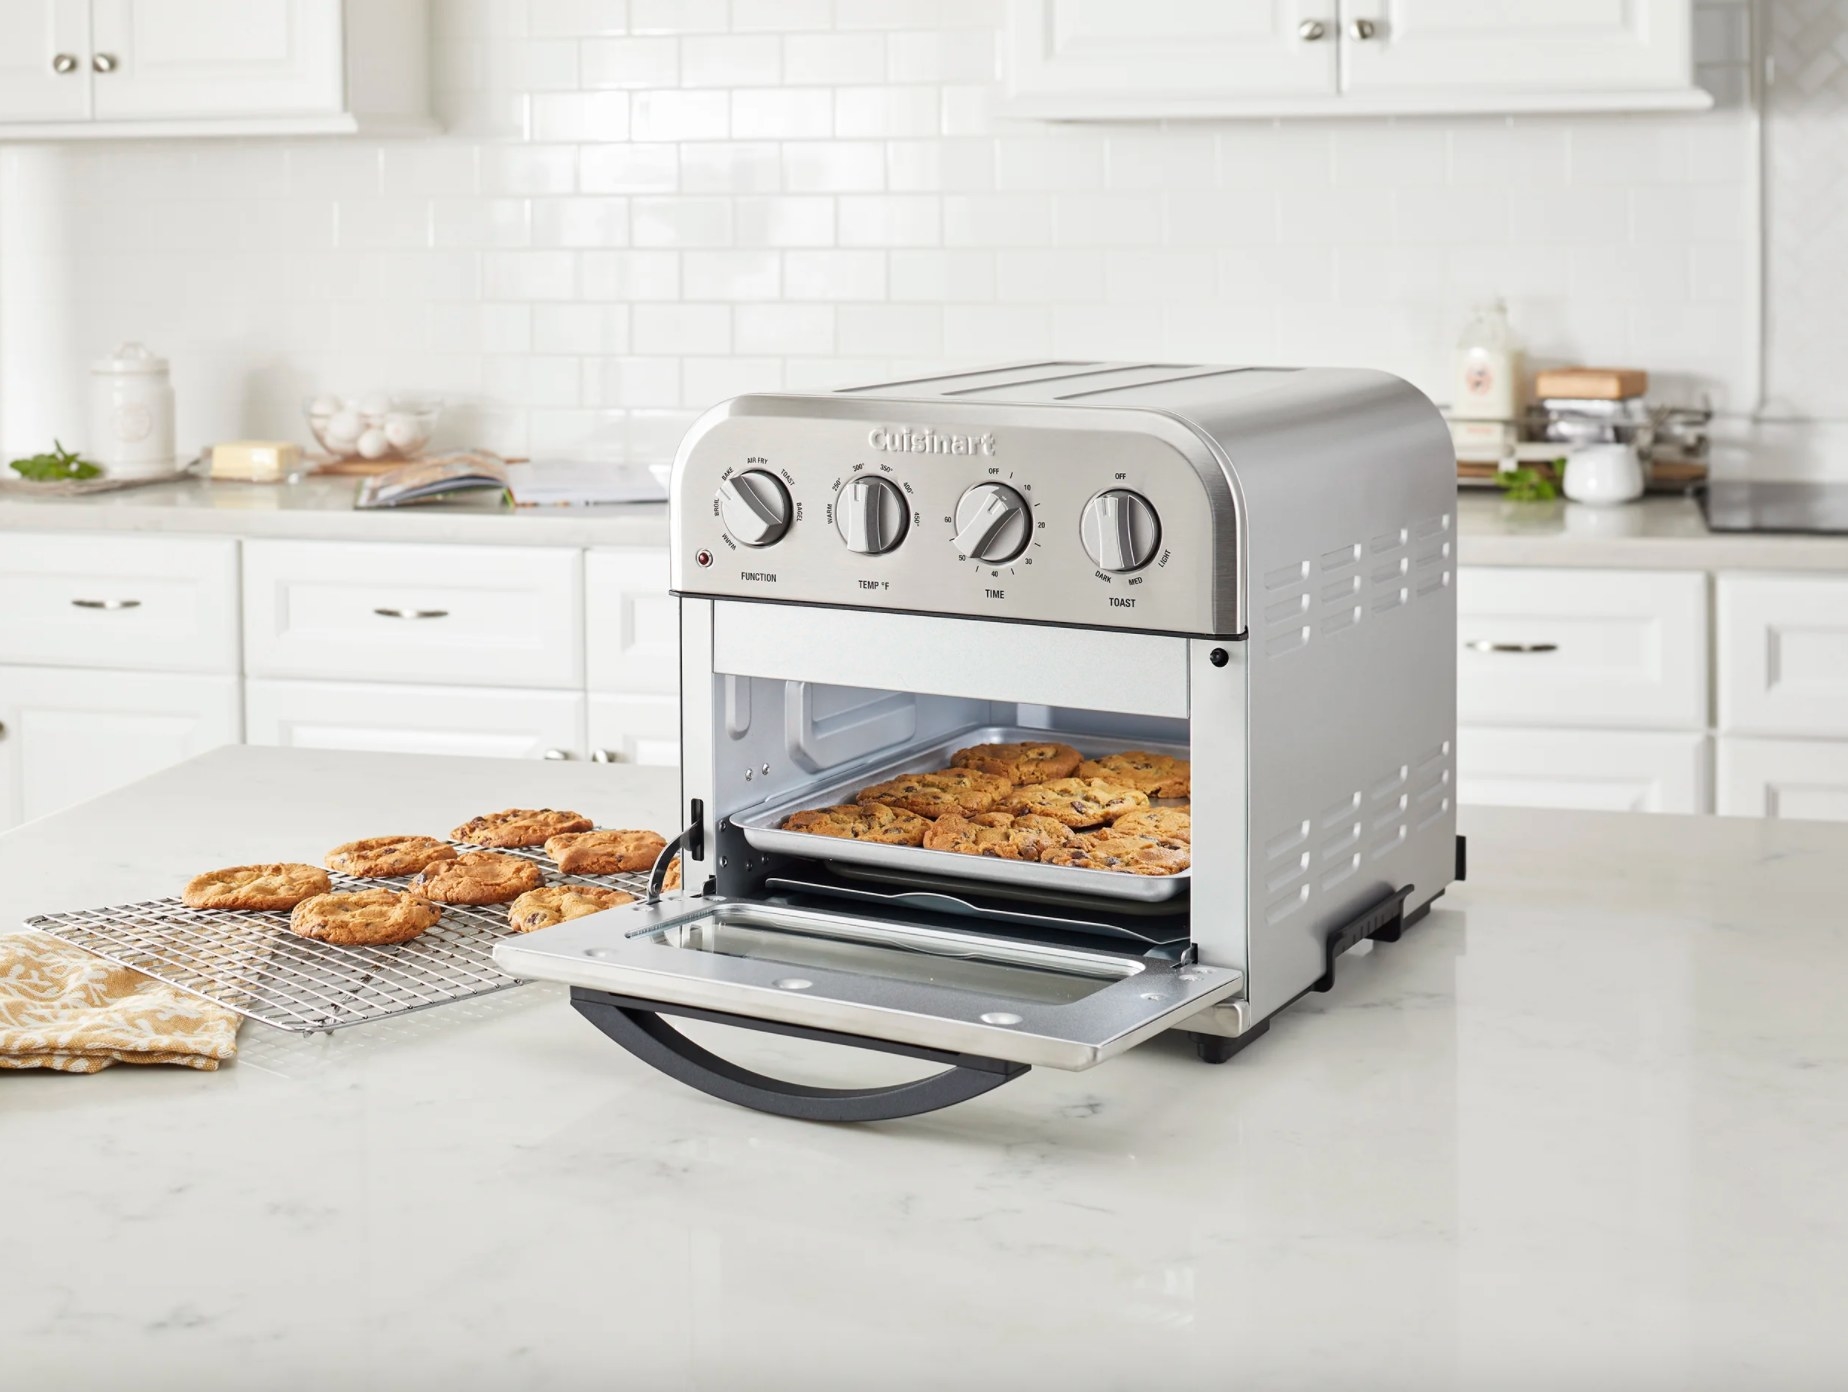 Cuisinart紧密型不锈钢空气油炸烤箱用于烘烤饼干